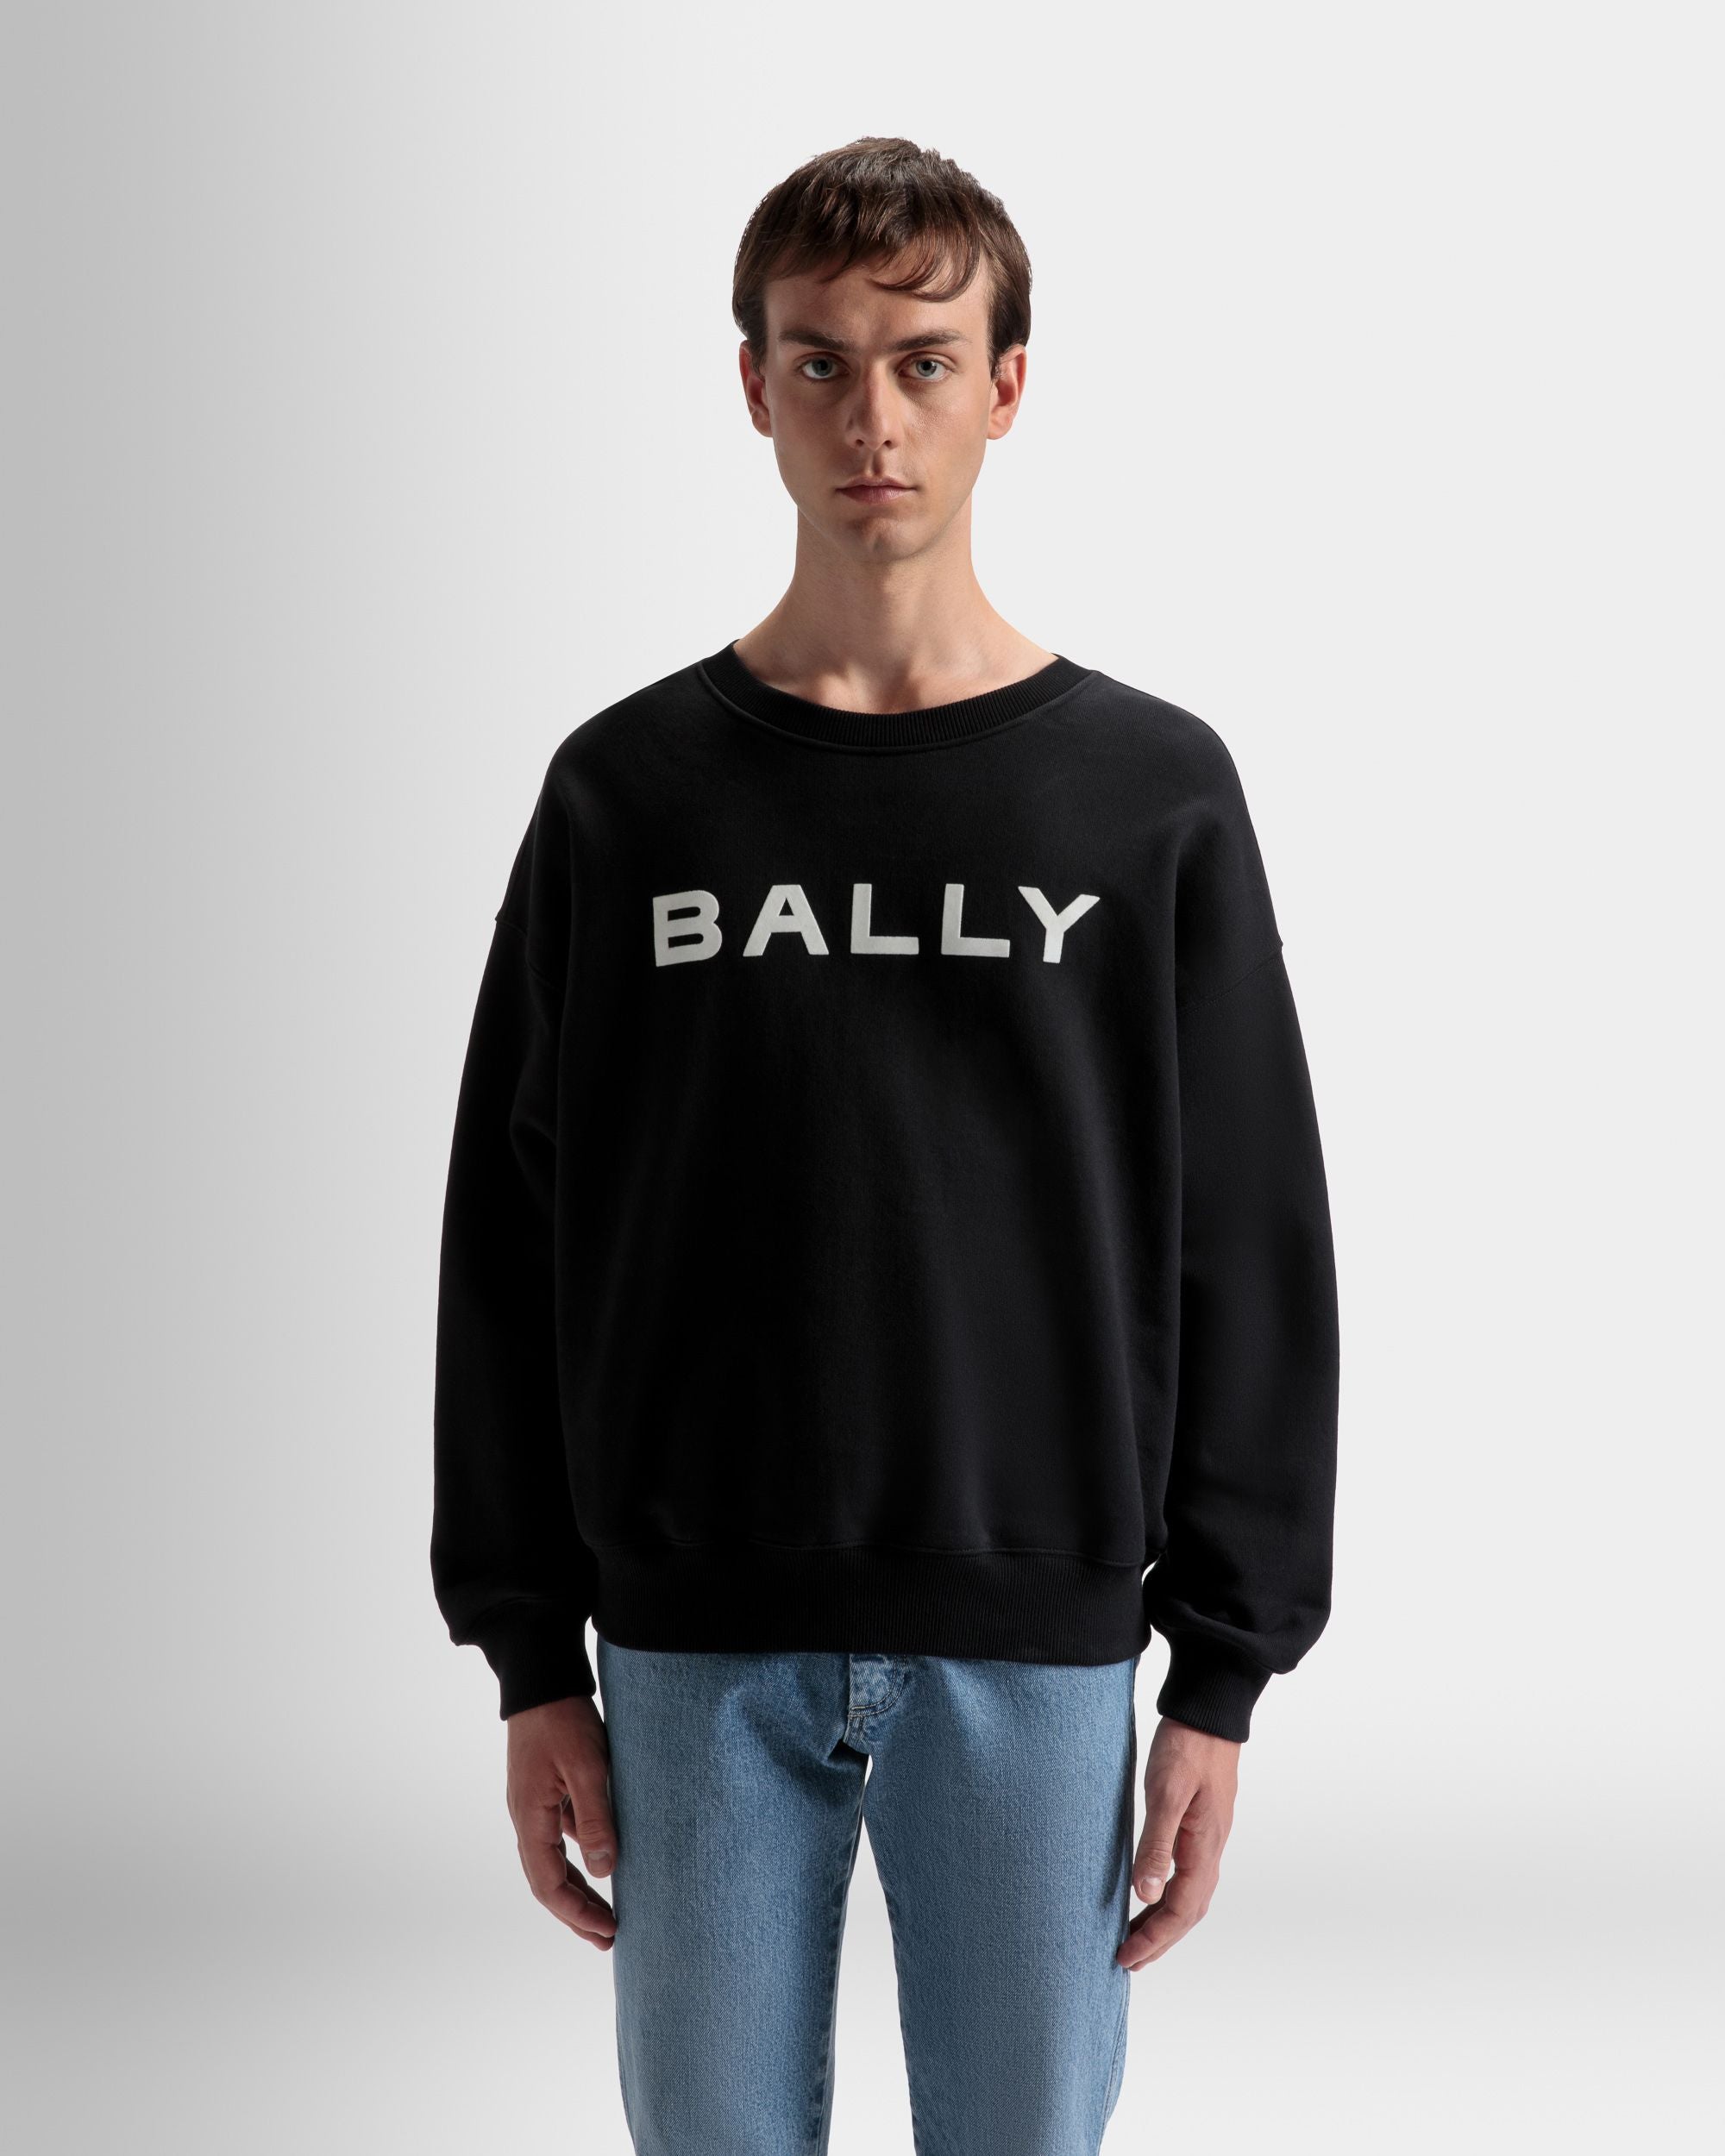 Logo Sweatshirt | Men's Sweatshirt | Black Cotton | Bally | On Model Close Up